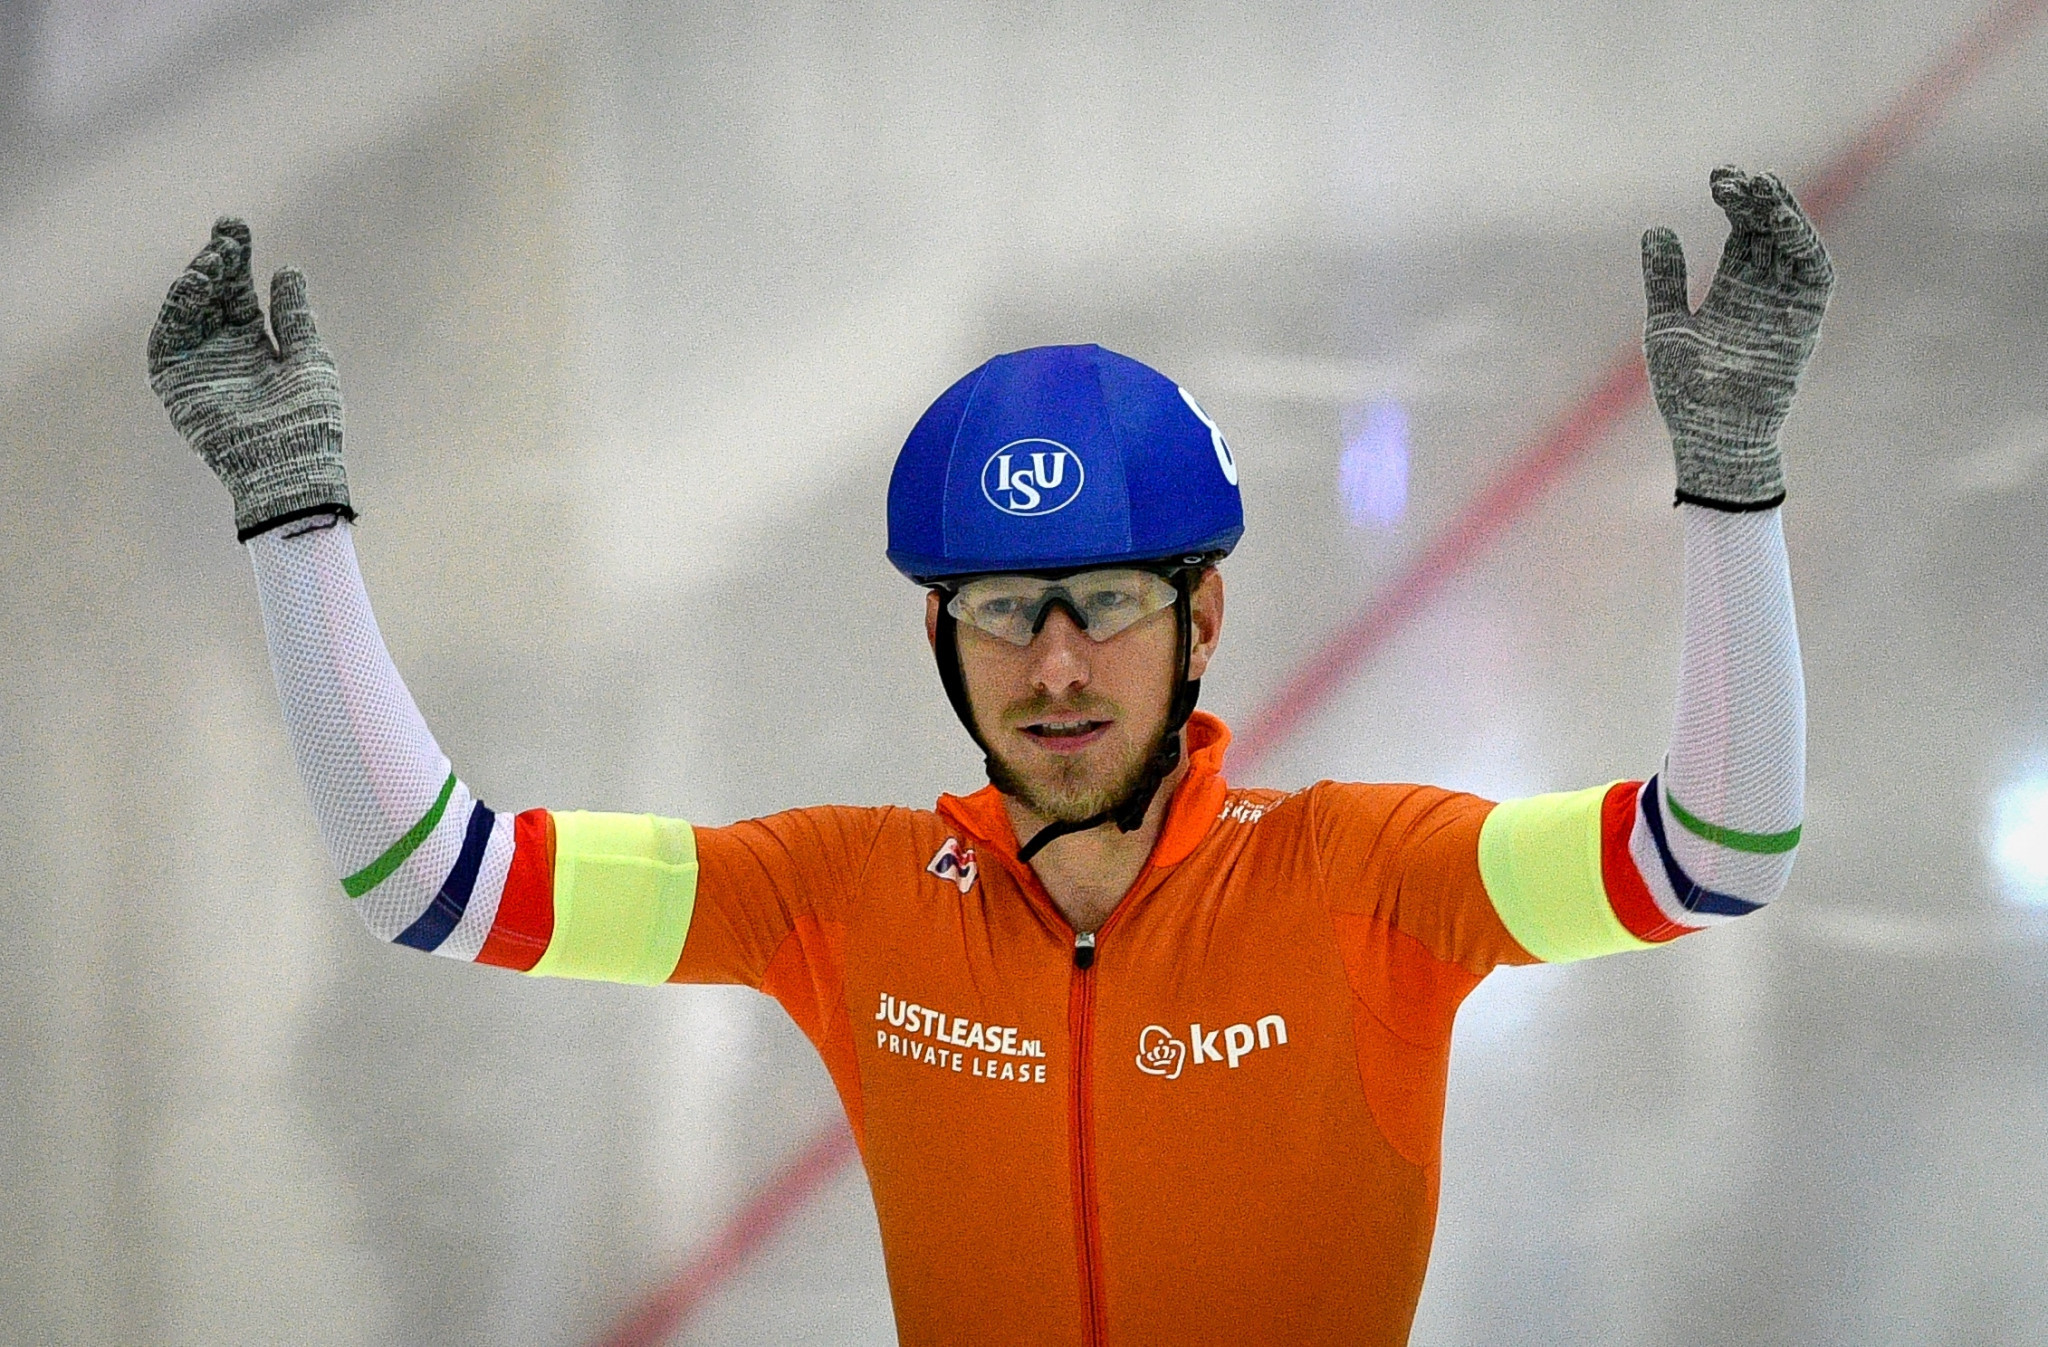 Jan Blokhuijsen won the men's mass start competition ©Getty Images